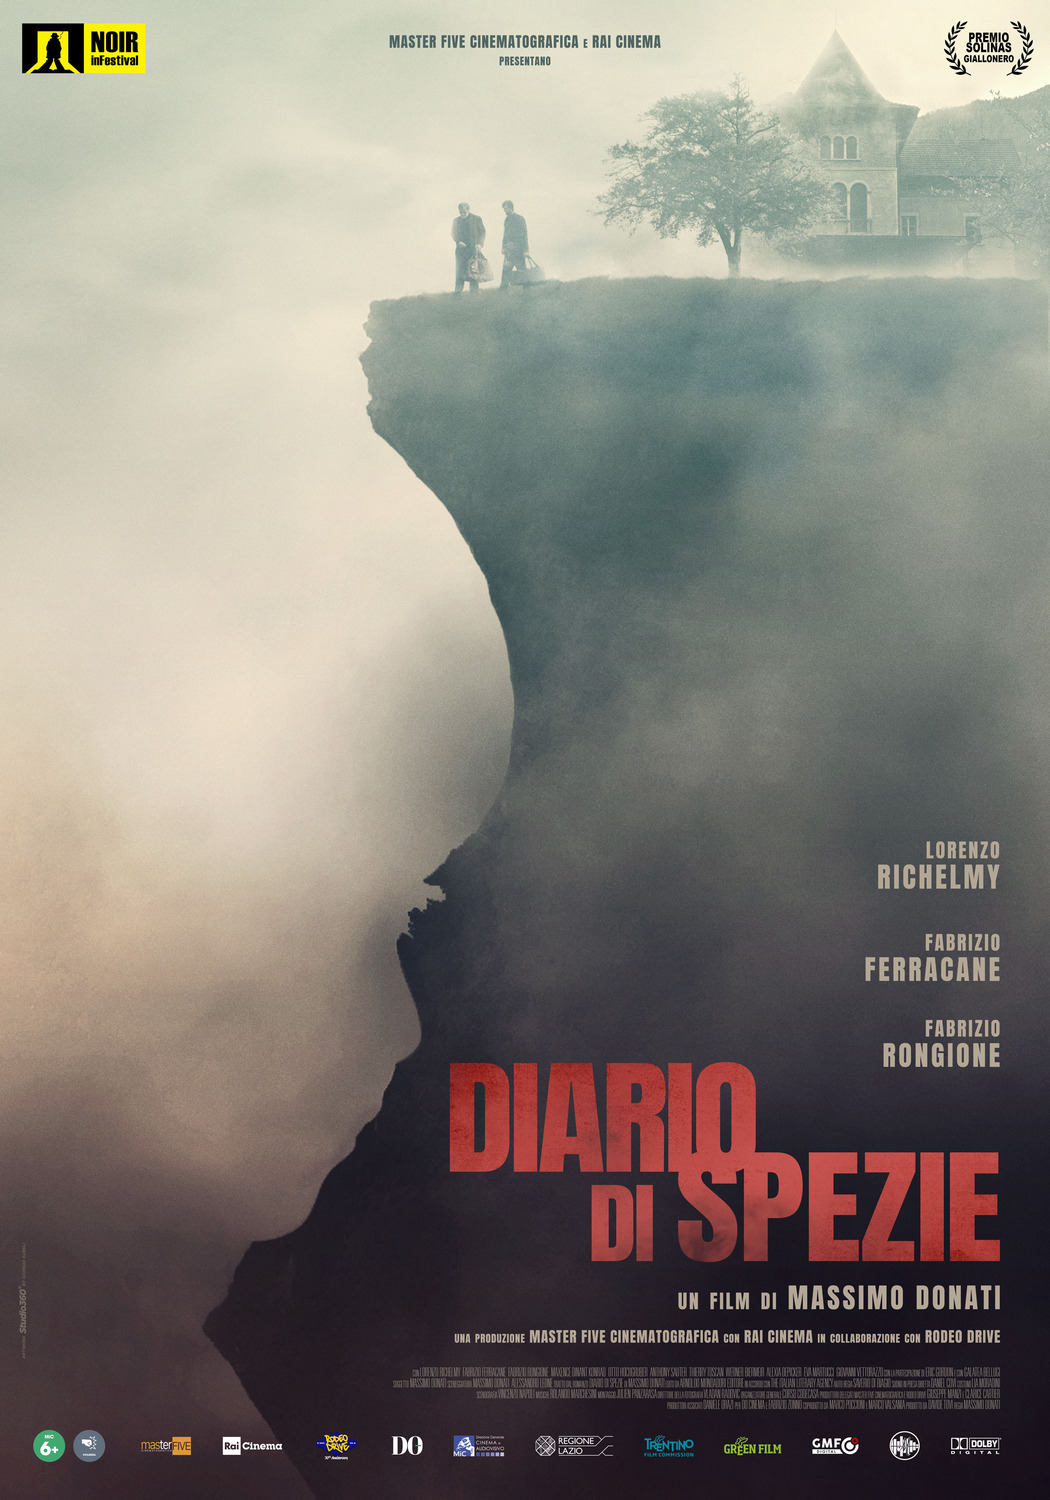 Extra Large Movie Poster Image for Diario di spezie 